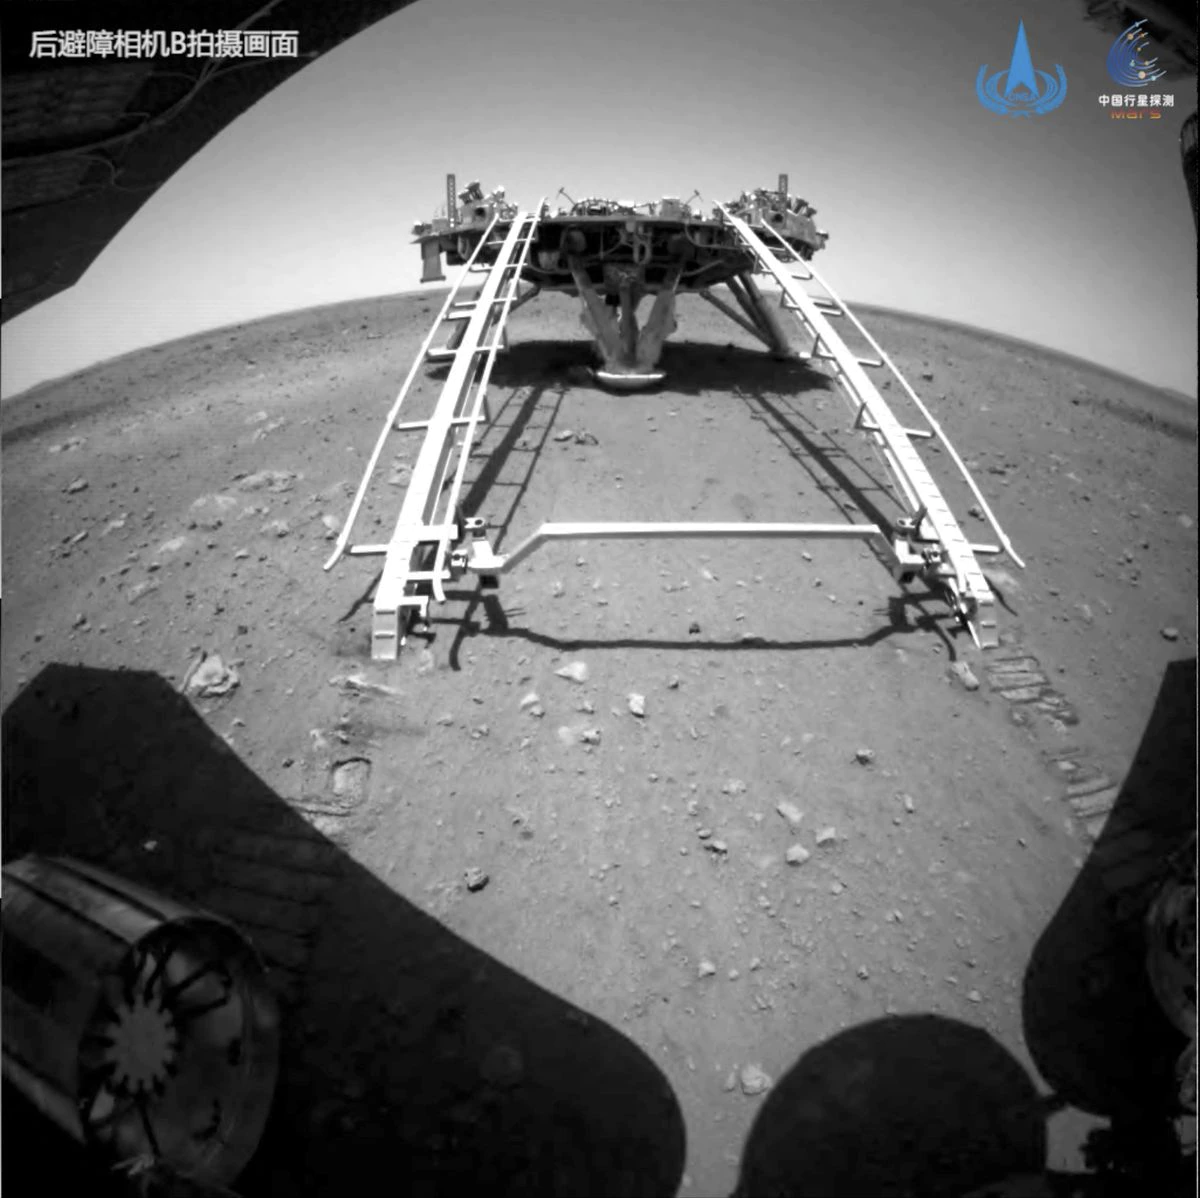 China’s Zhurong Rover Drives On Mars!